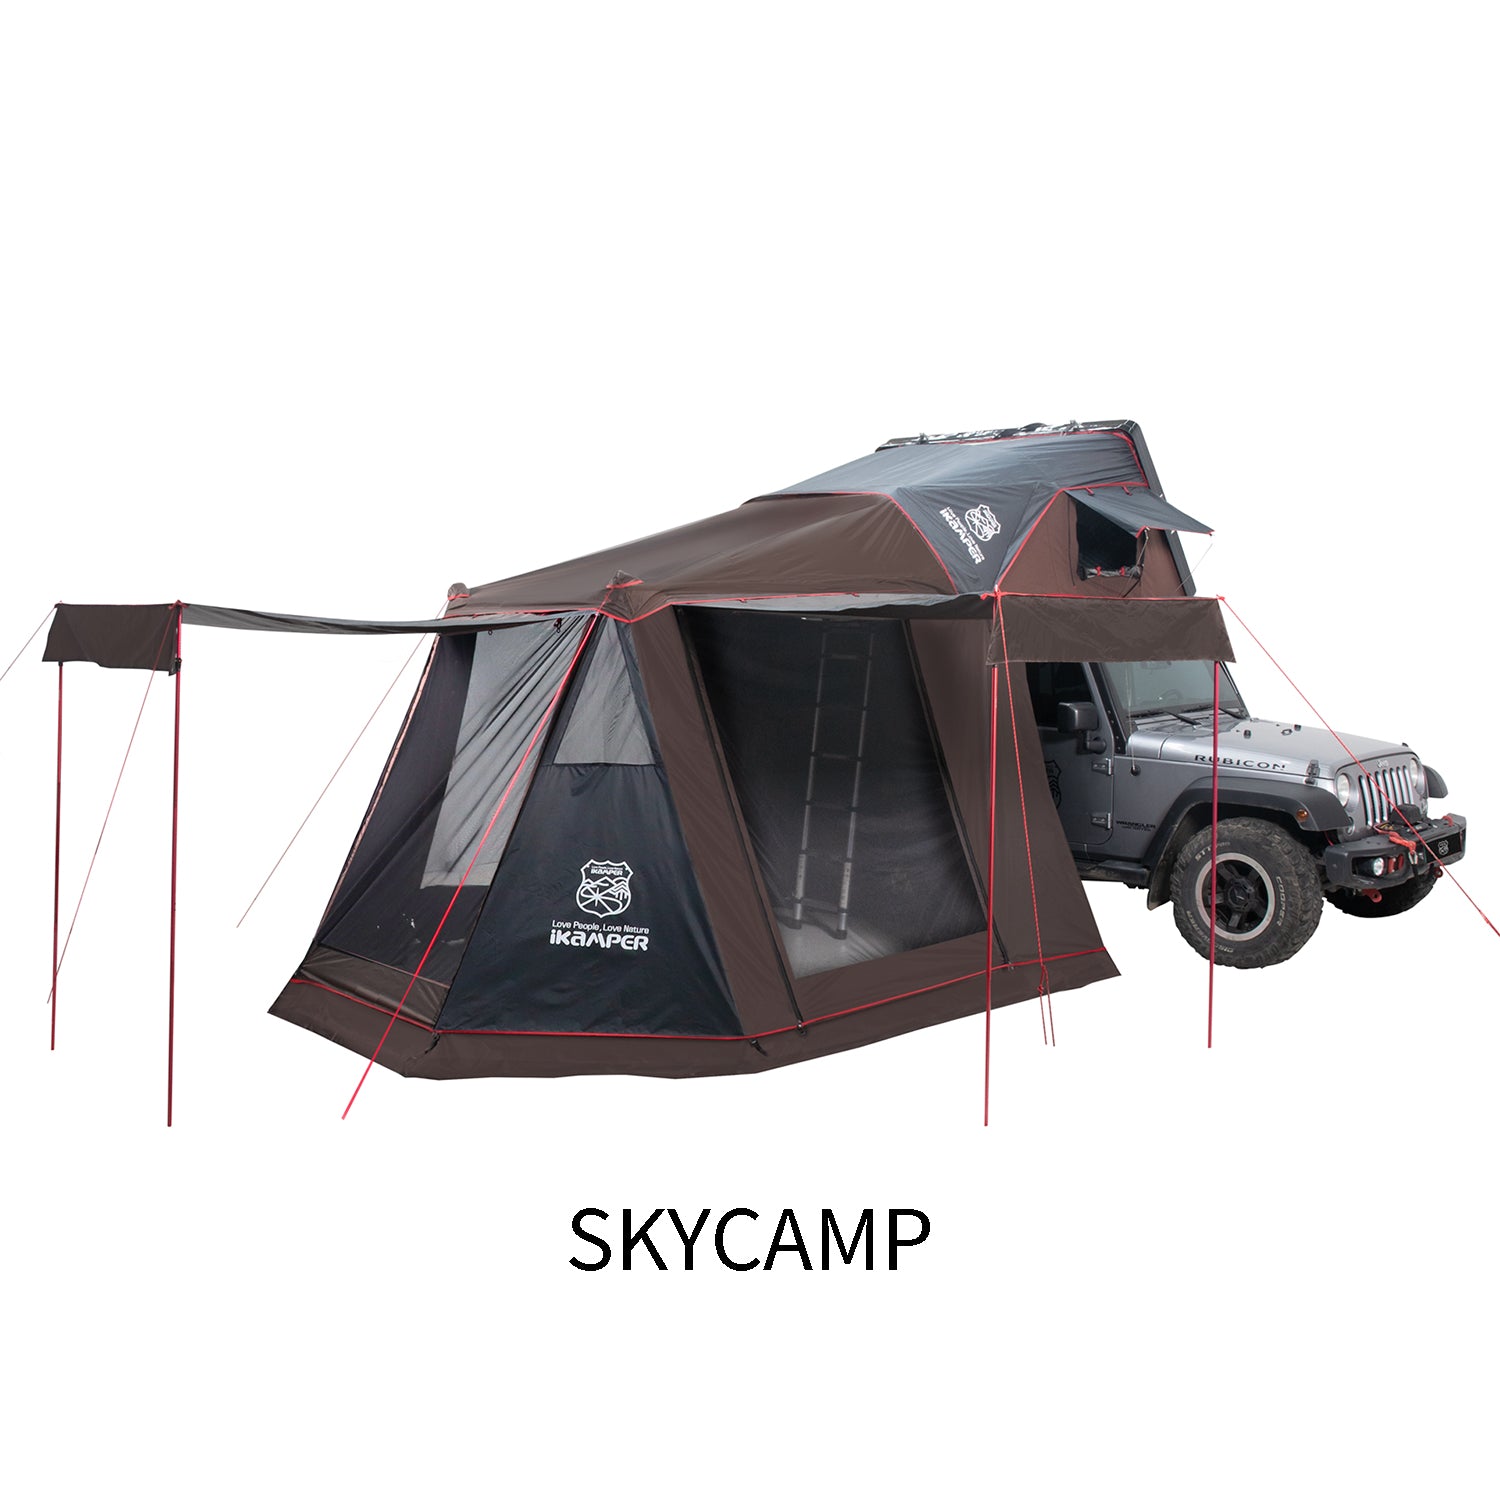 Skycamp 3.0 - Tente de toit 4 places - iKamper France